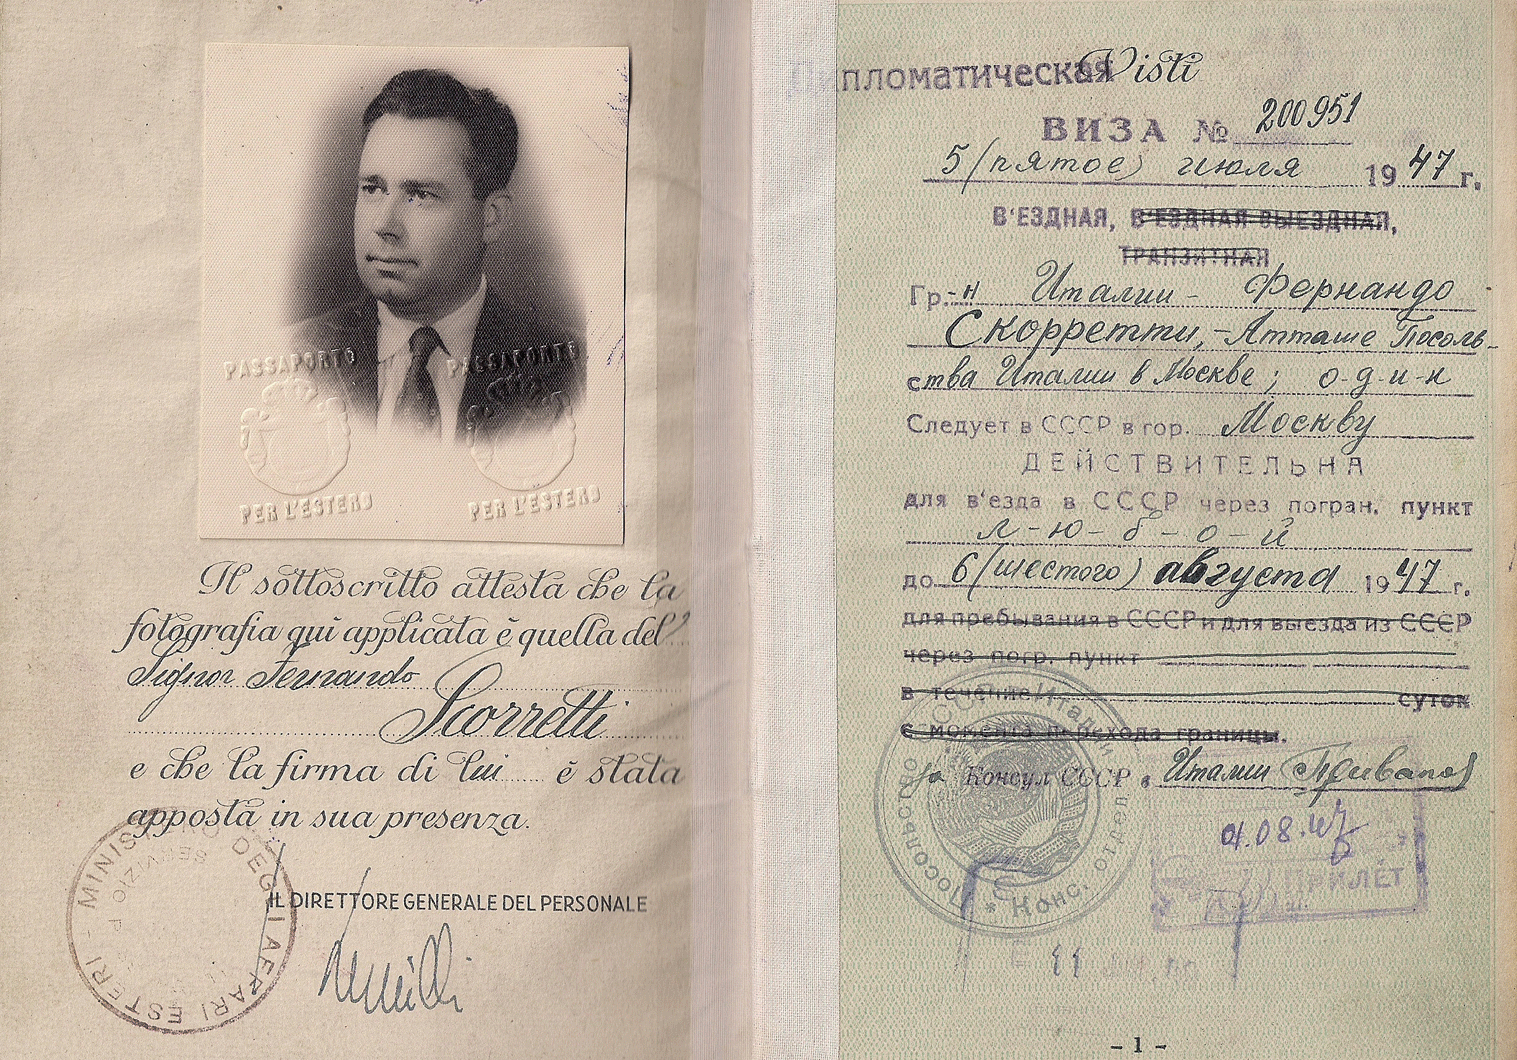 Post-WW2 diplomatic passport